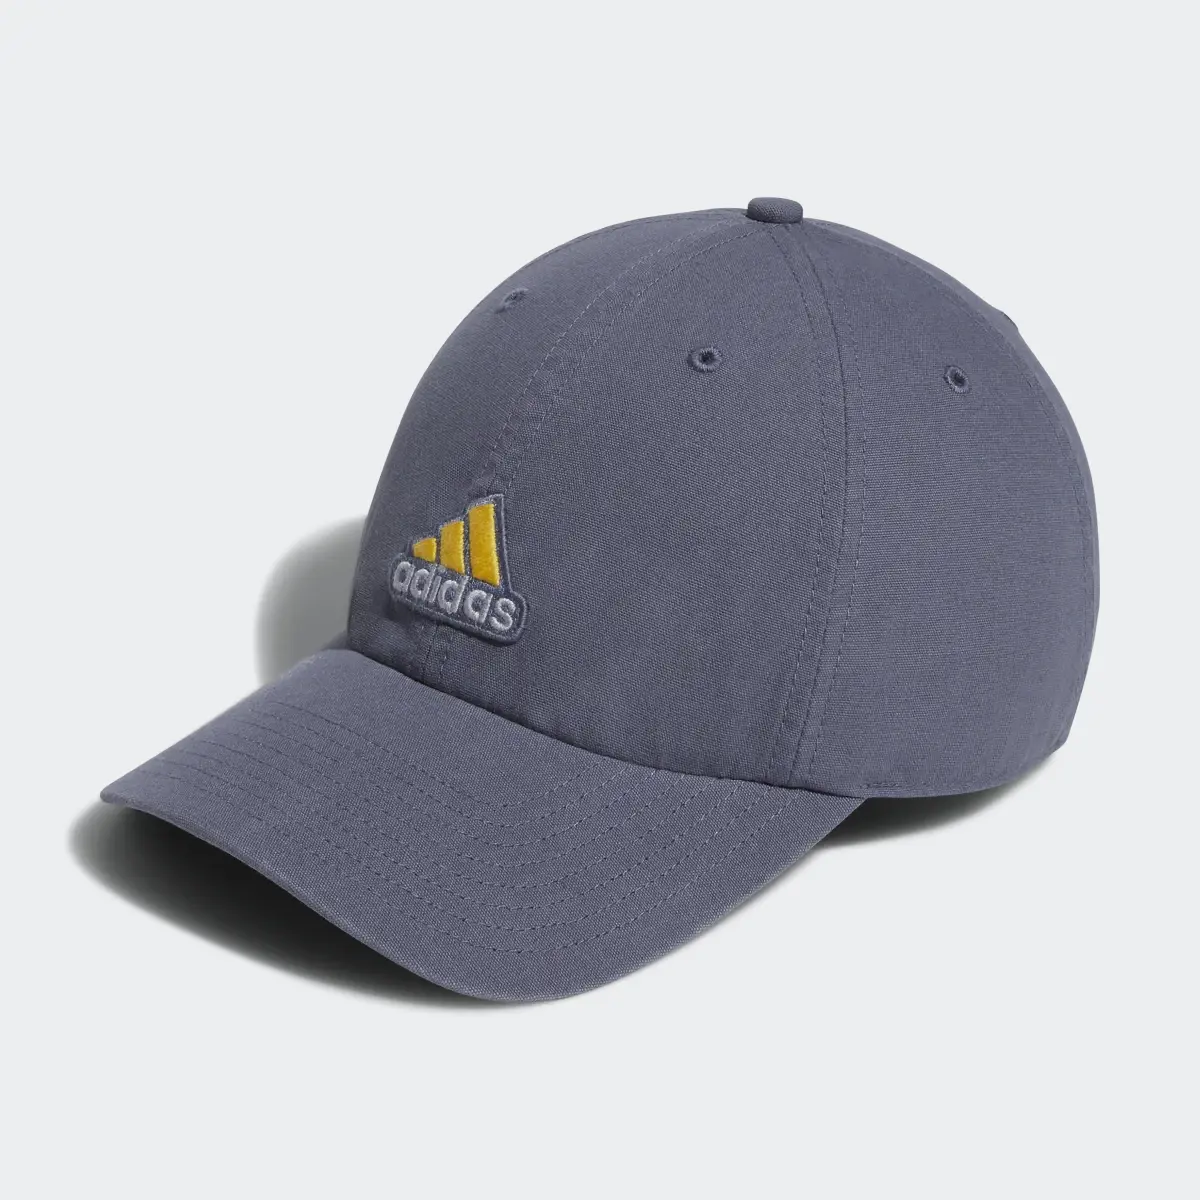 Adidas Ultimate Hat. 2